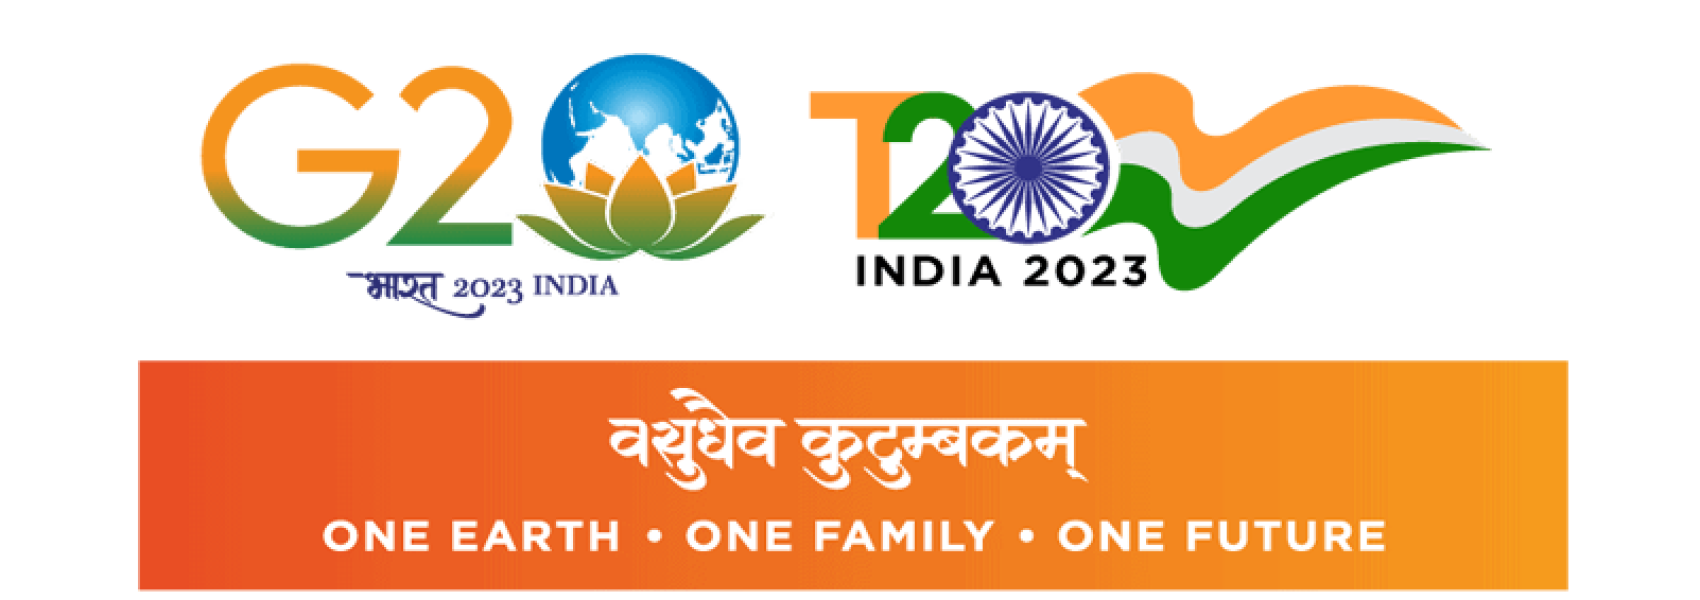 G20-T20-logo-transparent-